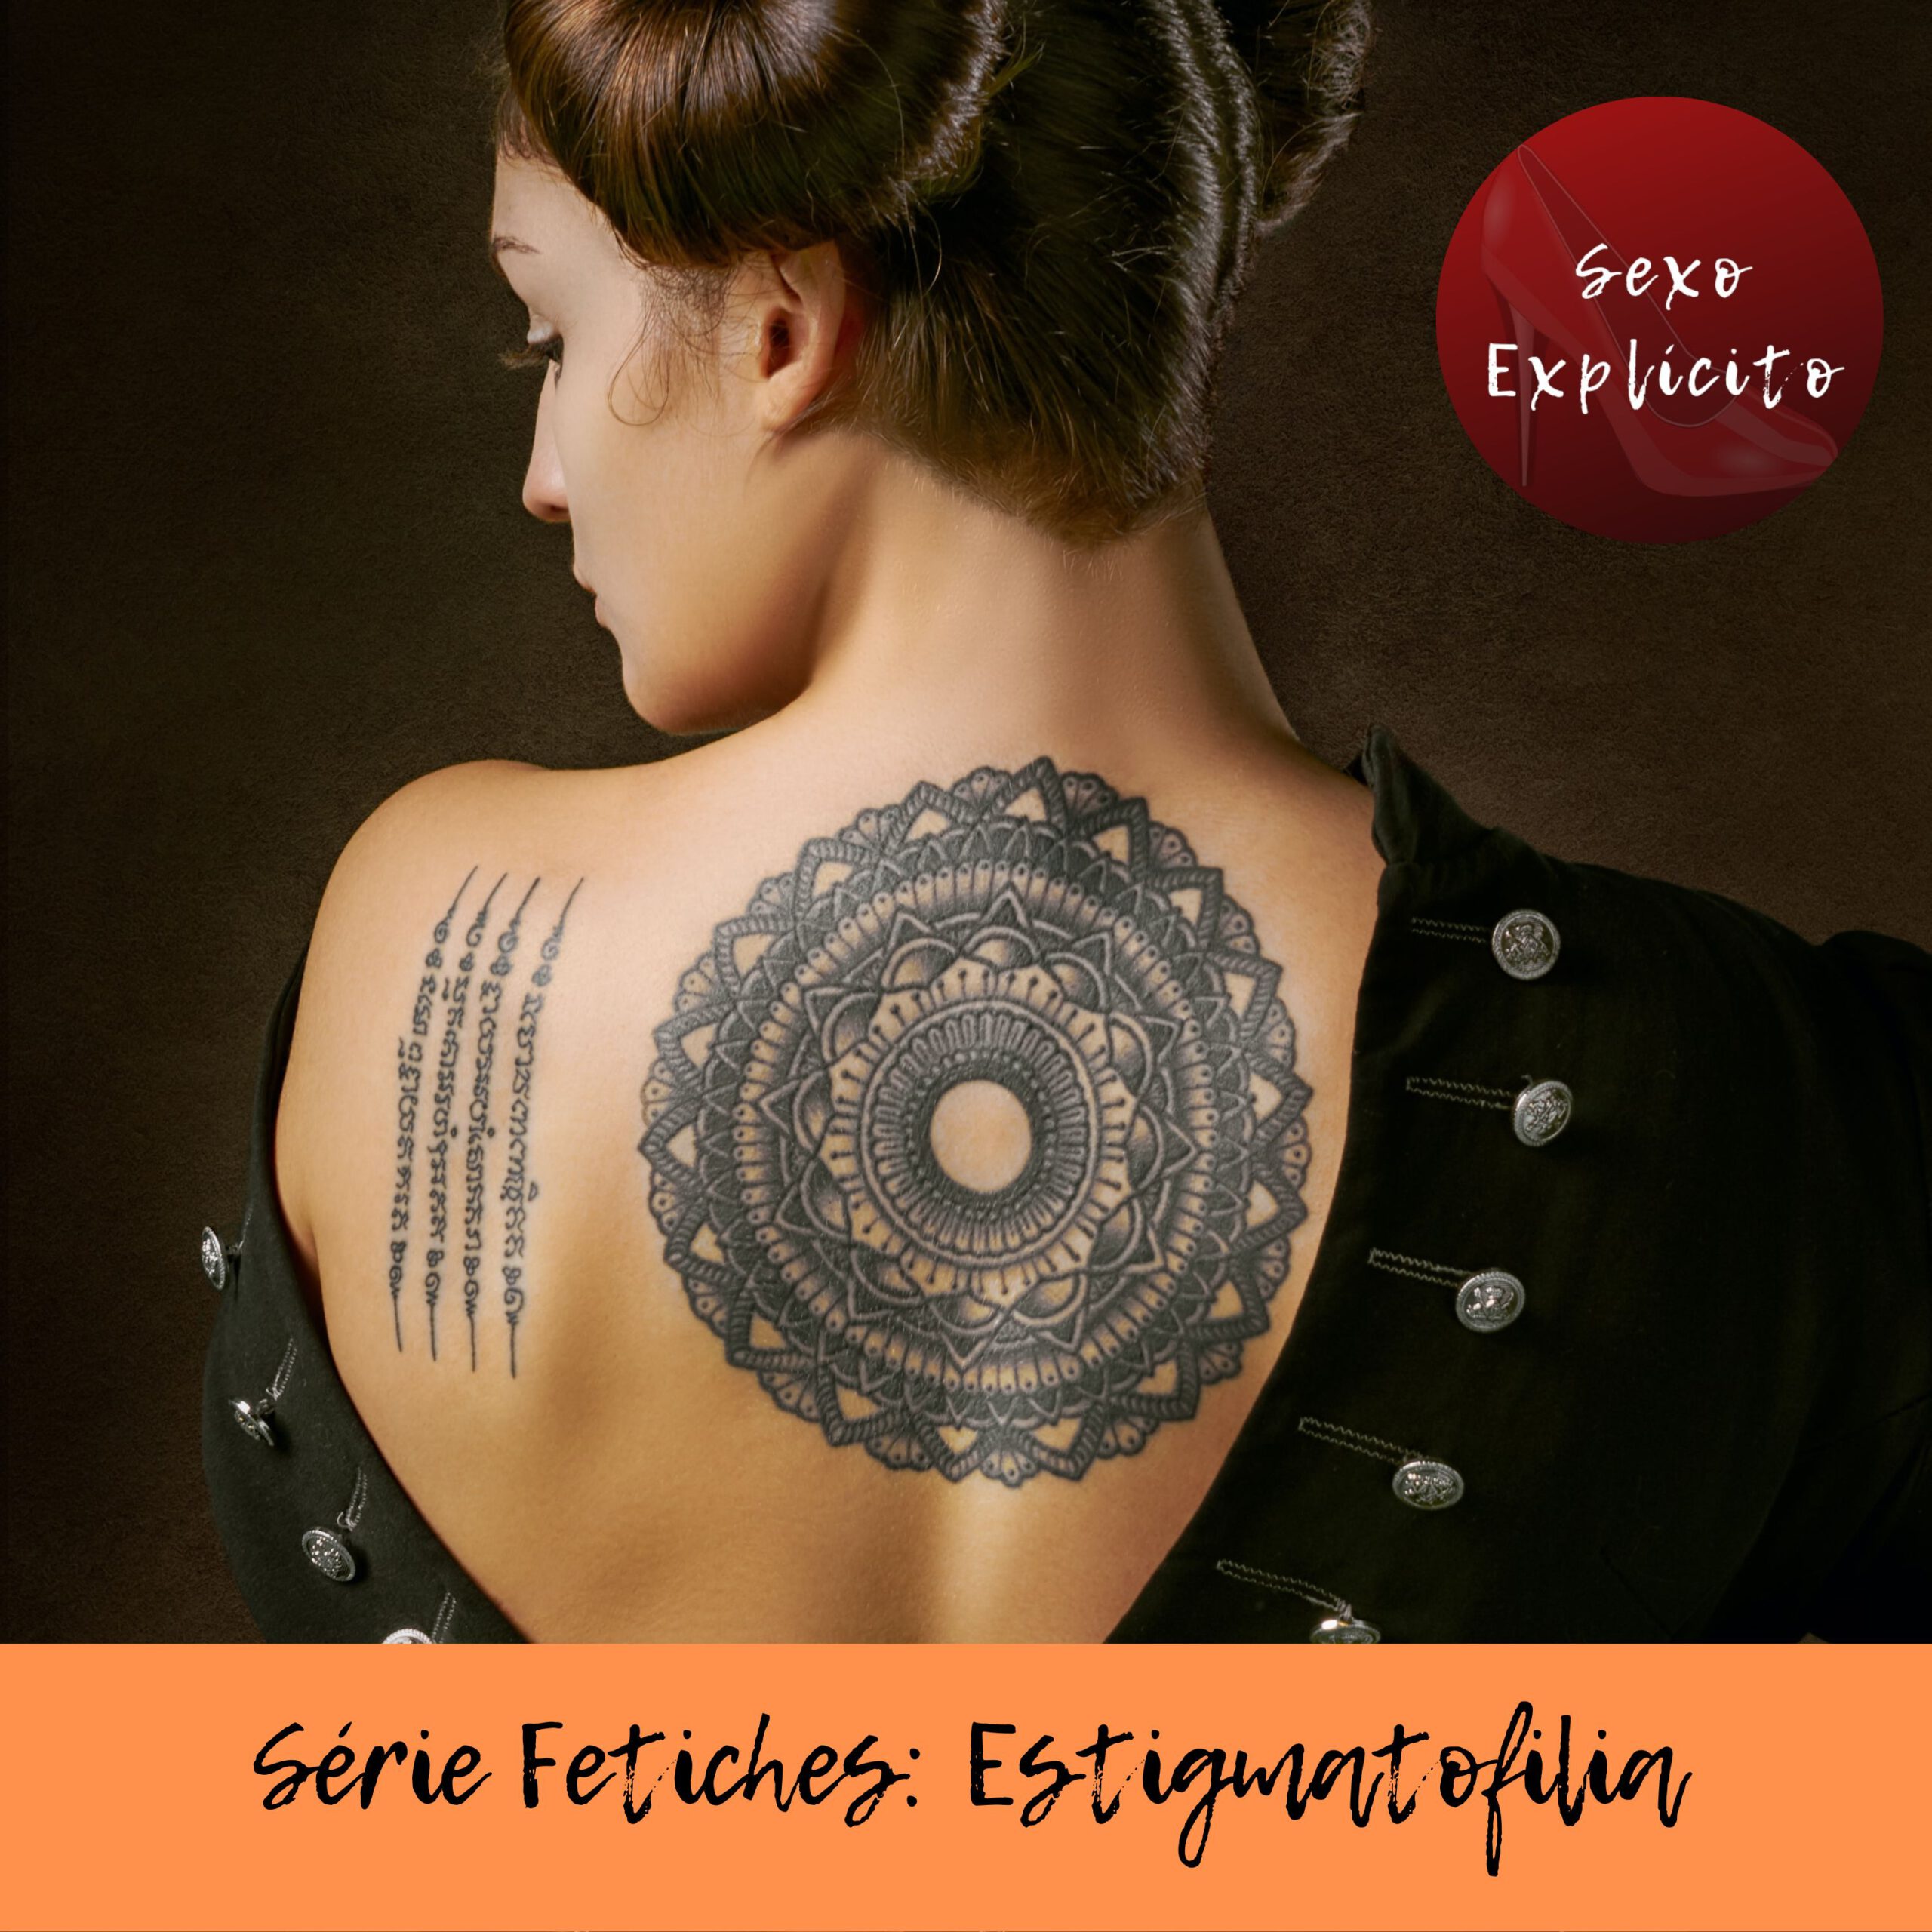 Série Fetiches: Estigmatofilia (Tatuagens e Piercings)